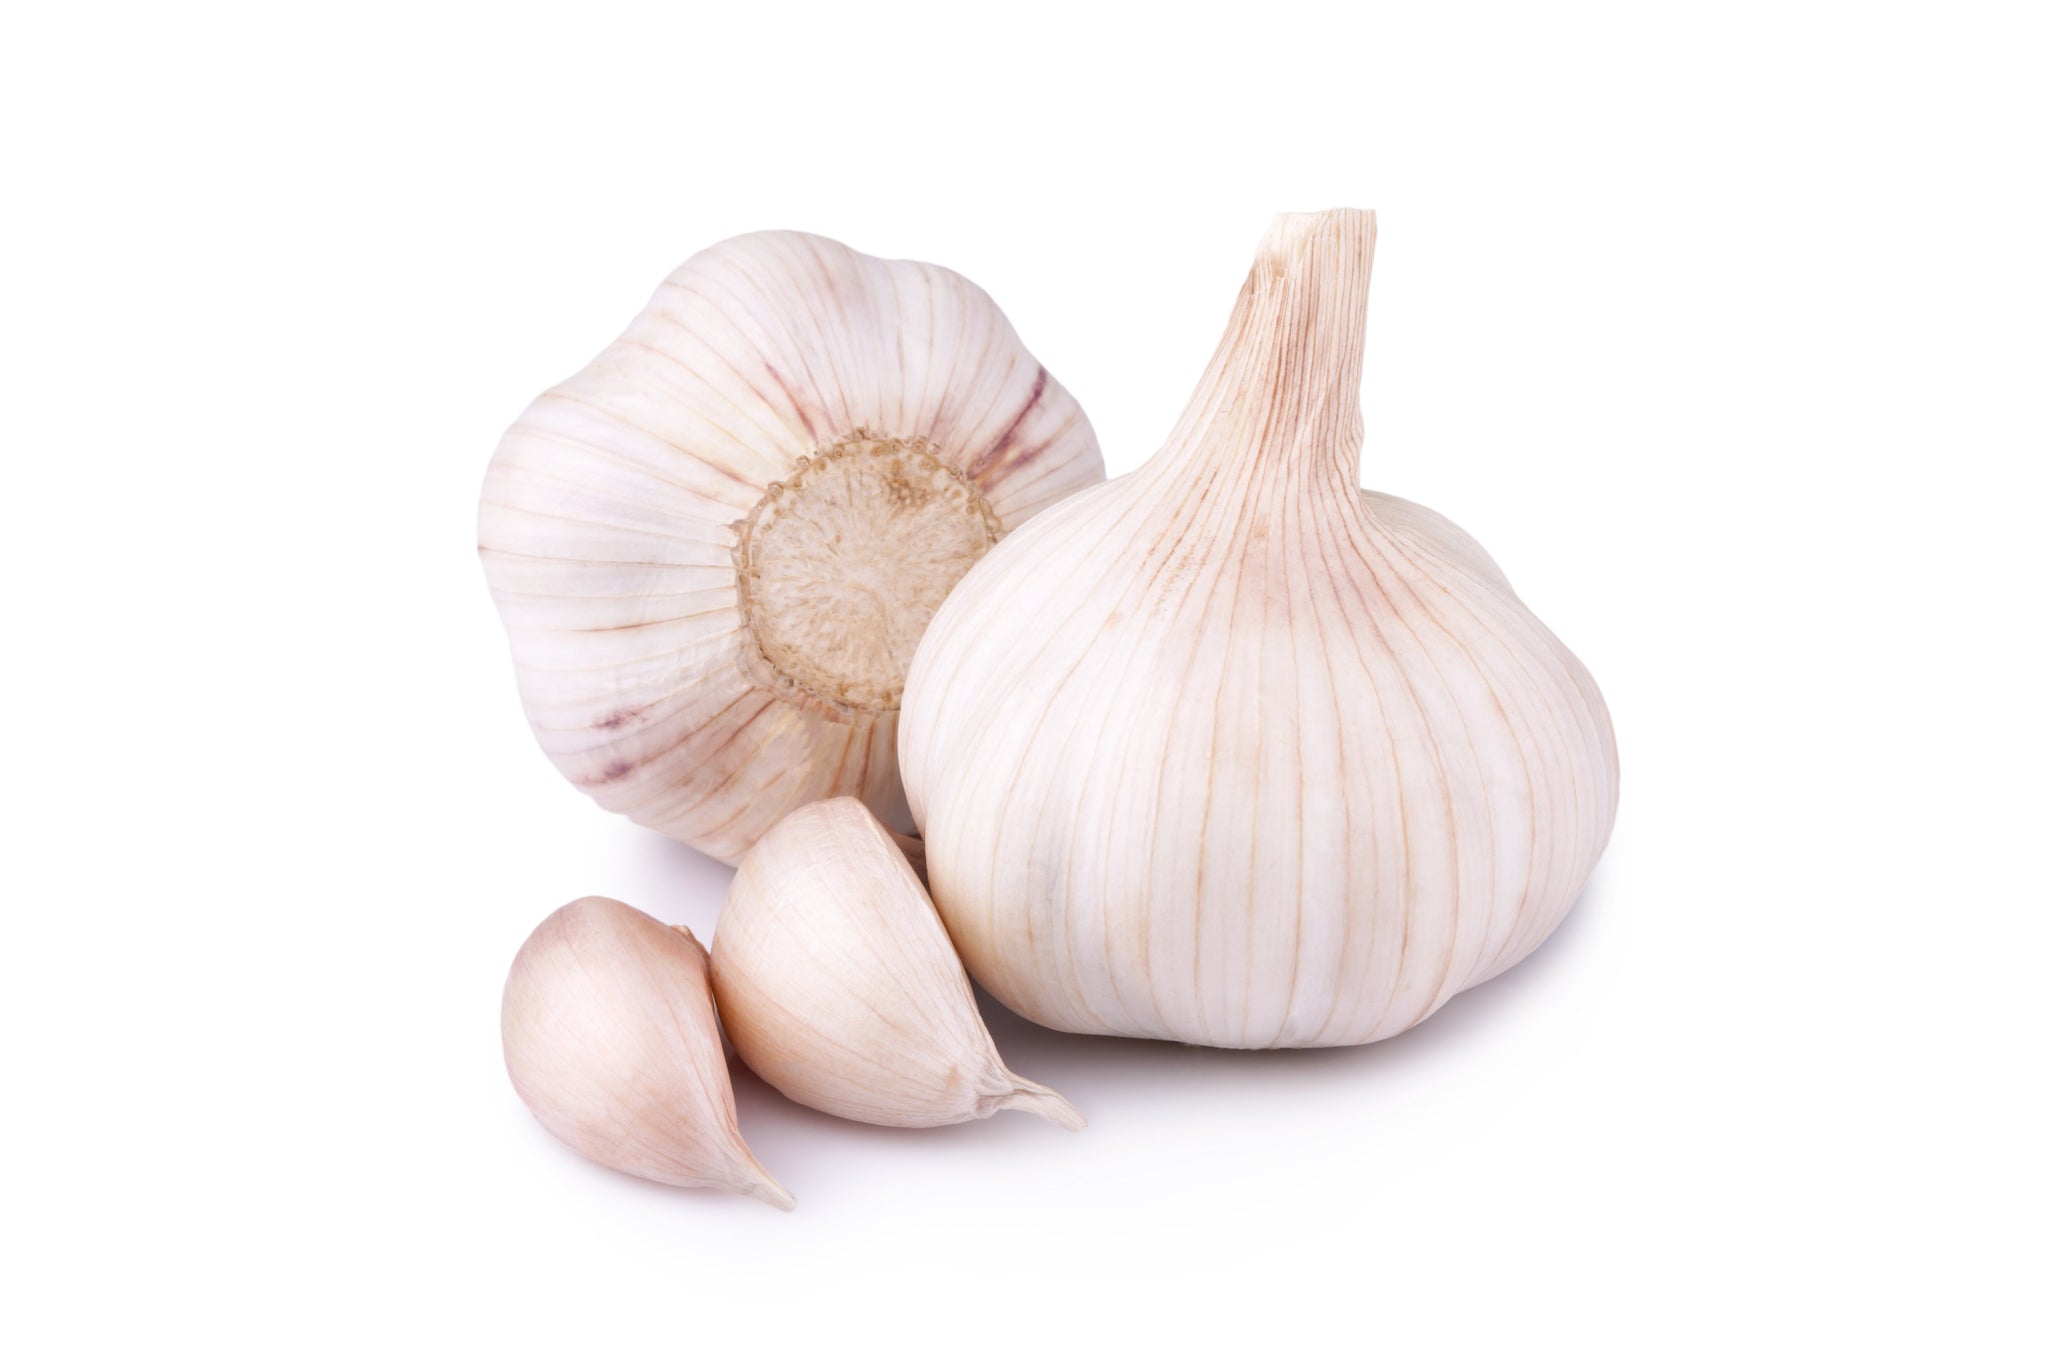 stm>Garlic, one